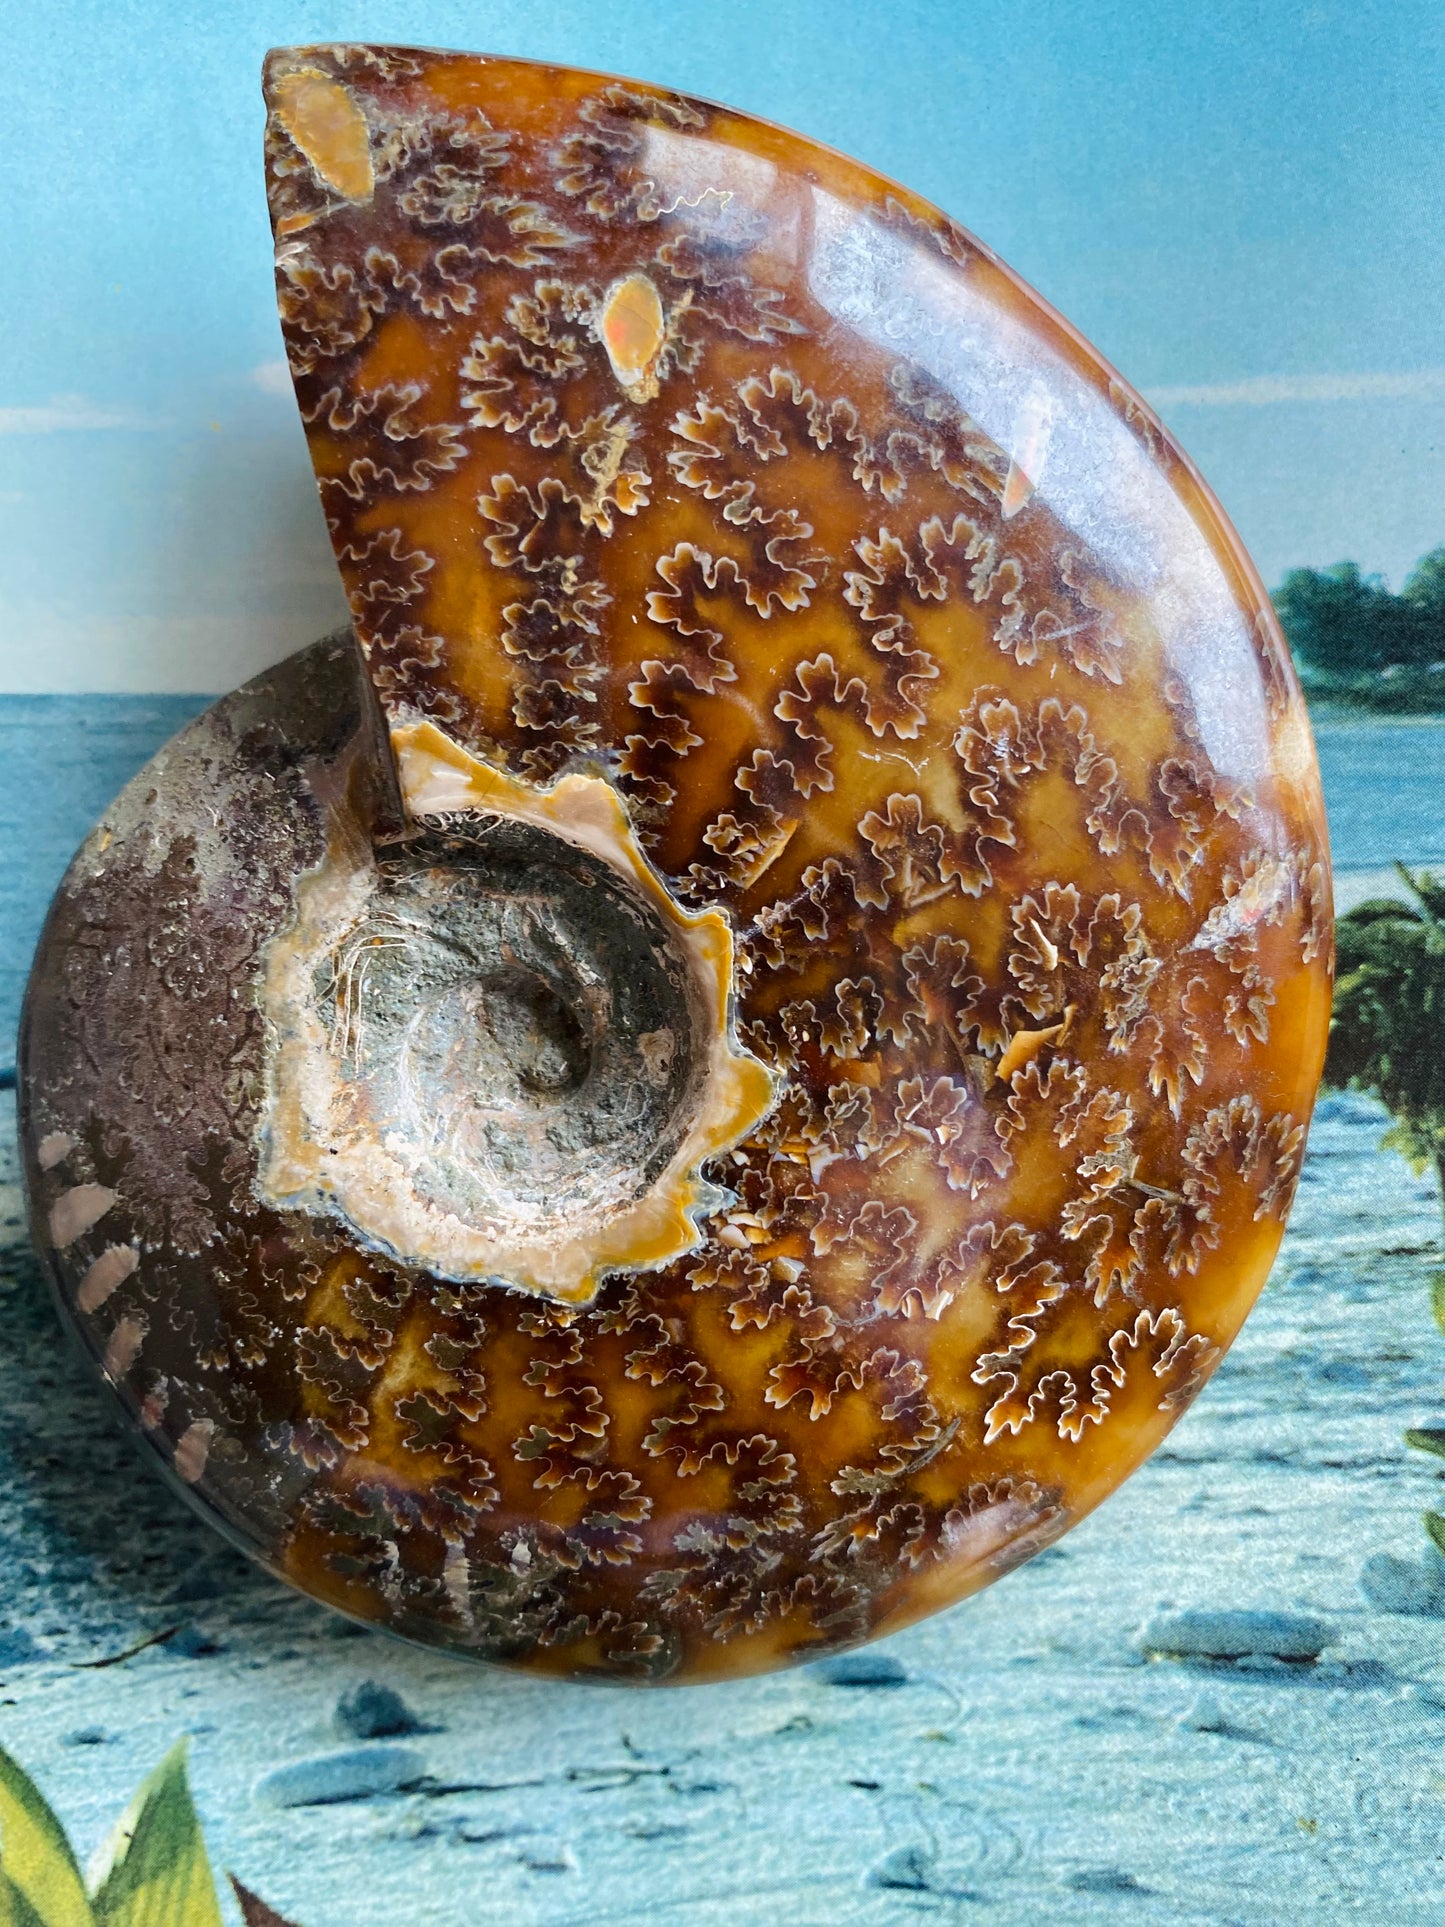 Polished Madagascar Ammonite Fossil 5"x4" - Moon Room Shop and Wellness